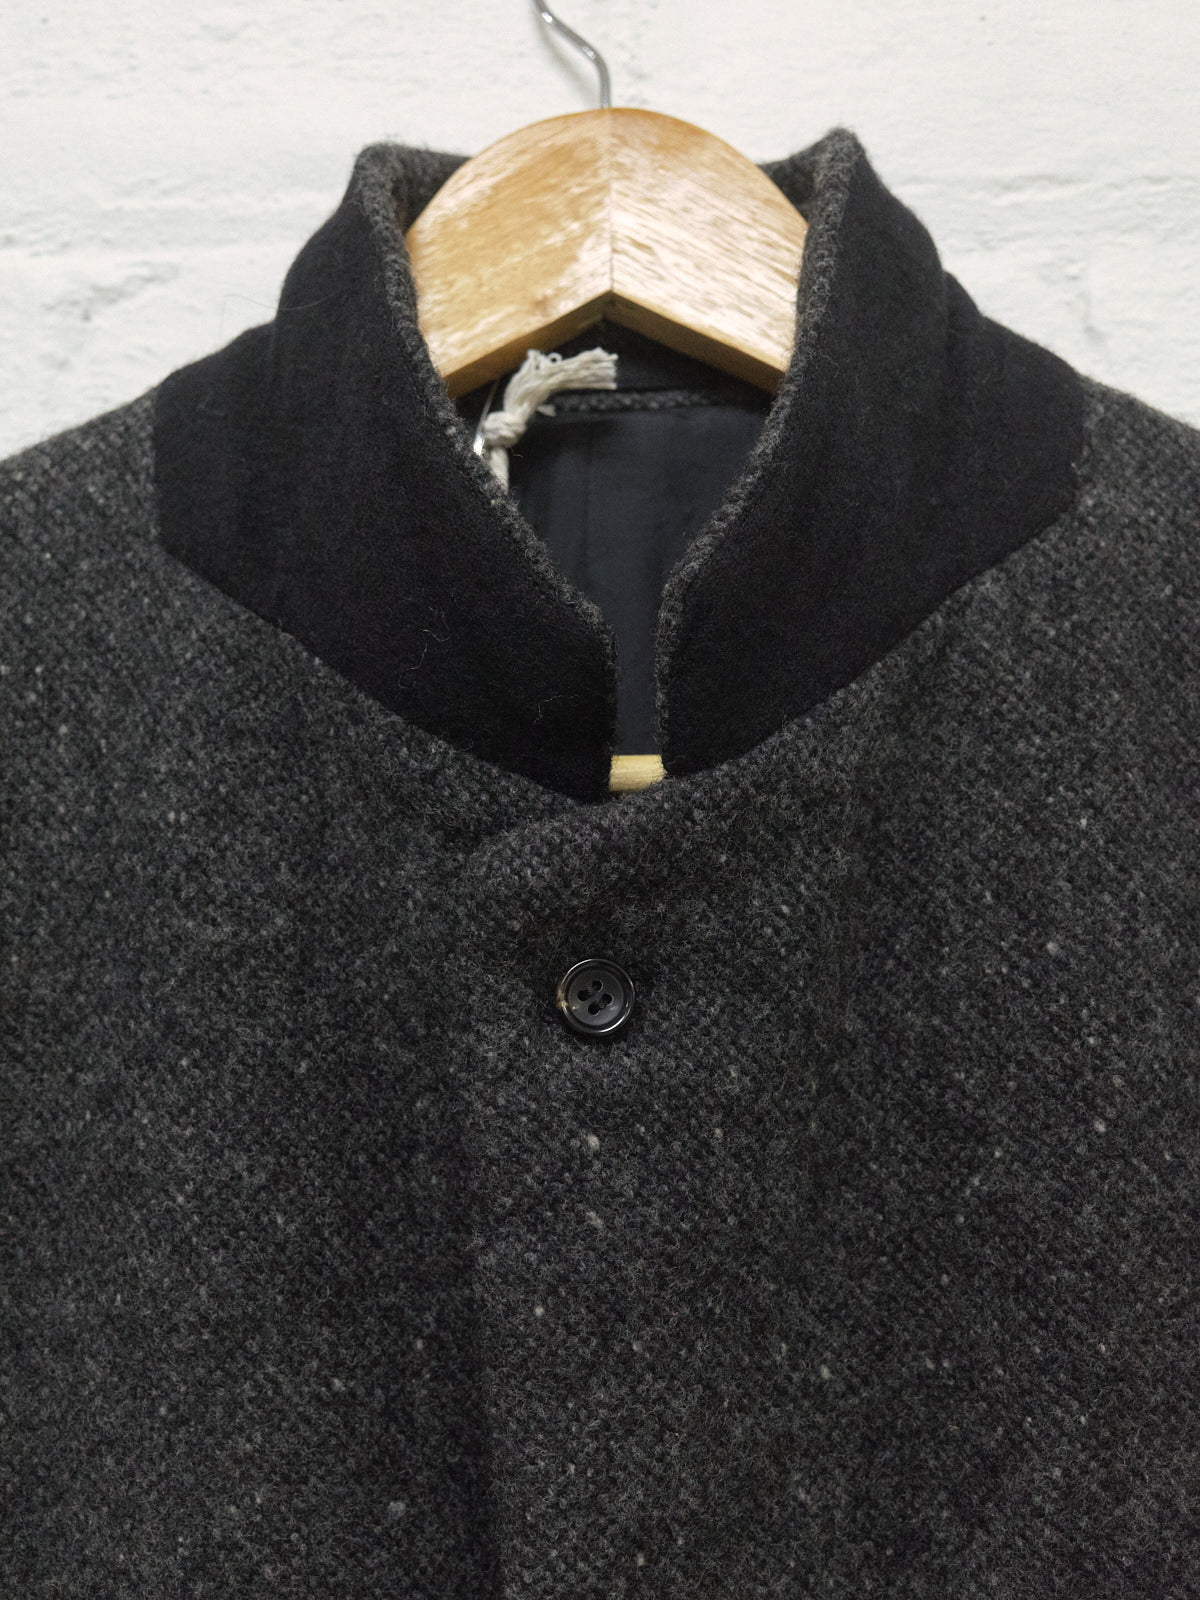 Comme des Garcons Homme 2003 grey boiled wool 3 button blazer - mens S M